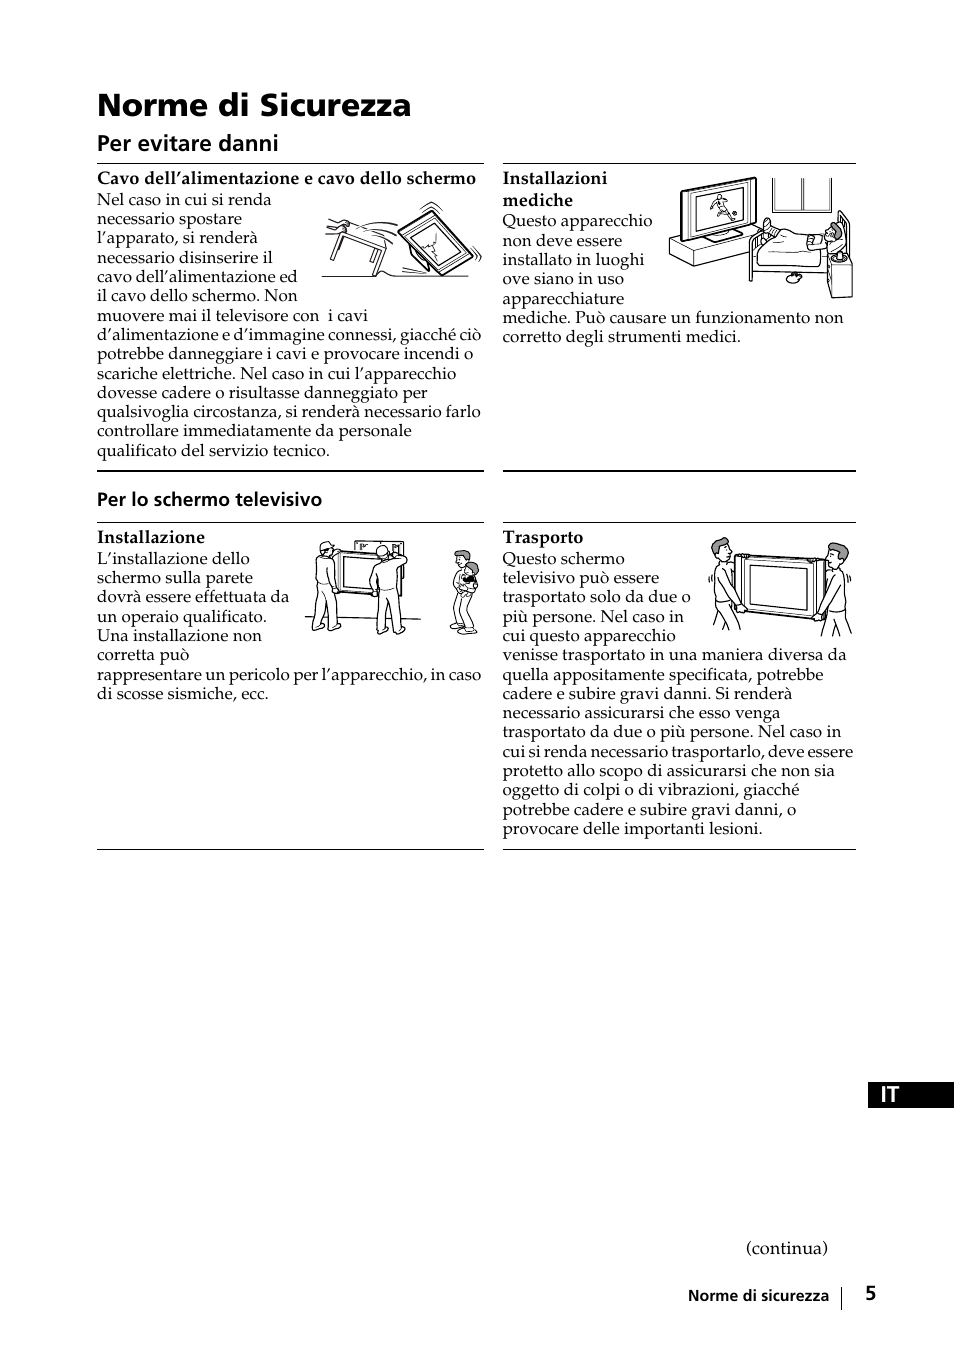 Norme di sicurezza | Sony KE-42MR1 Manuale d'uso | Pagina 6 / 302